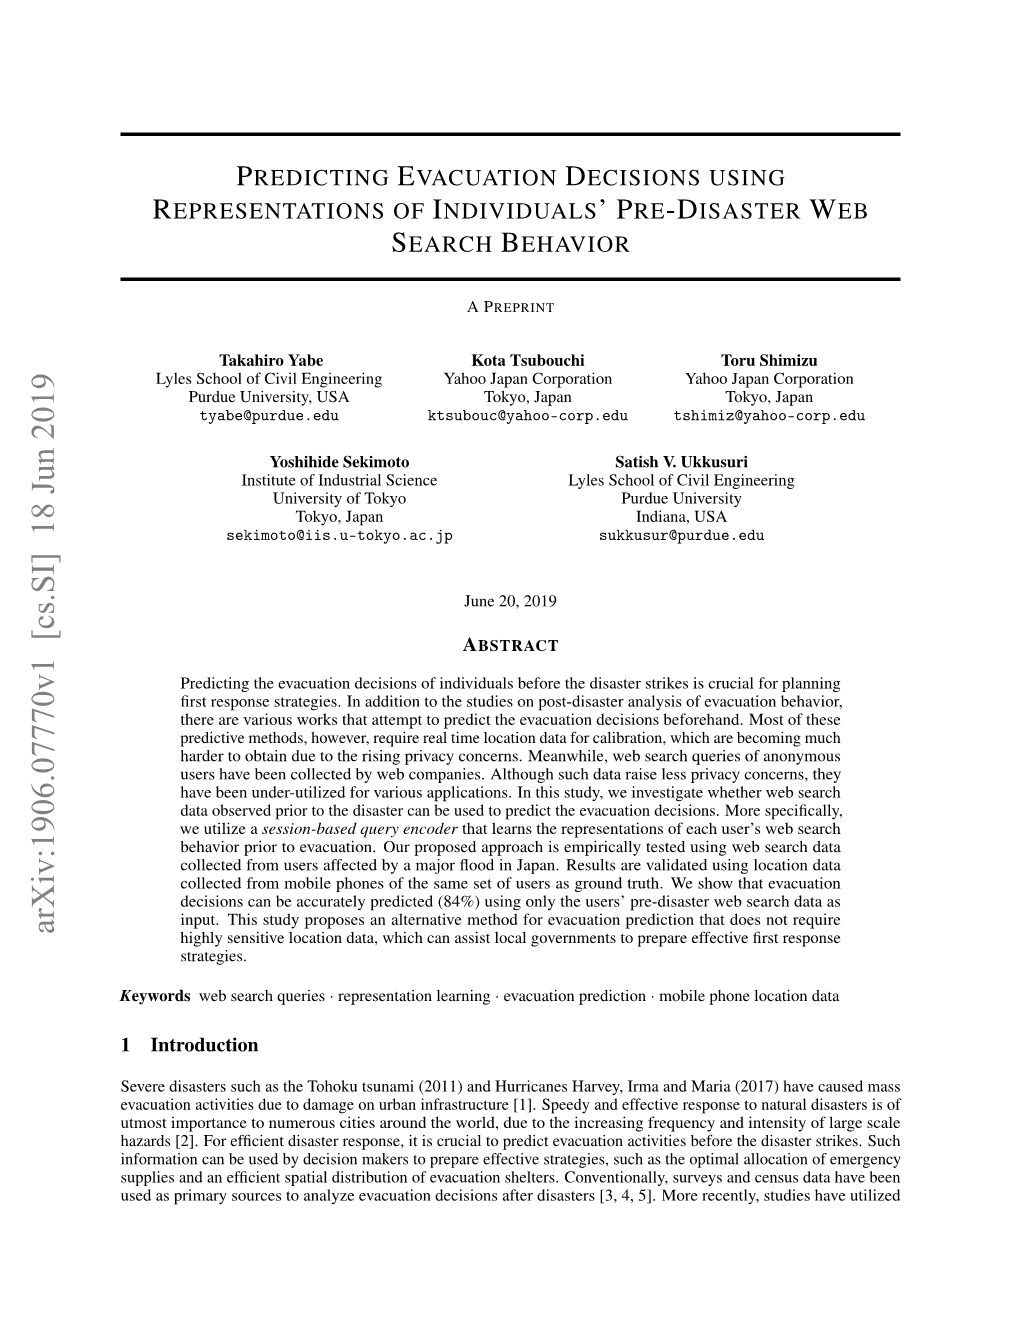 Predicting Evacuation Decisions Using Representations of Individuals' Pre